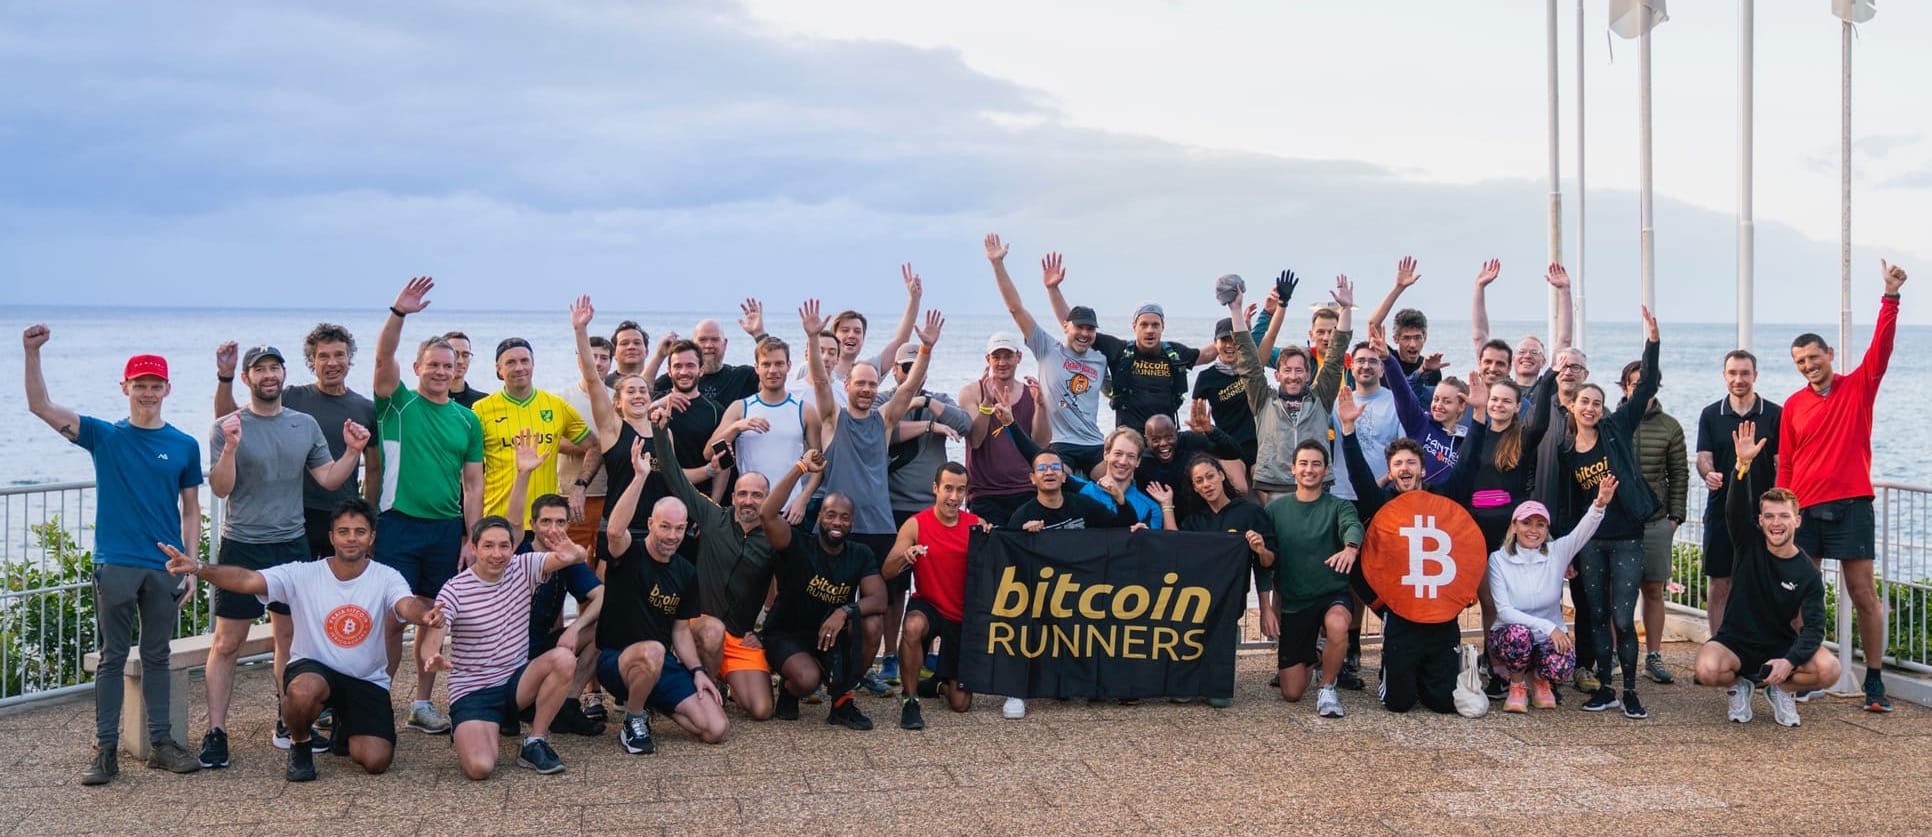 Bitcoin Runners